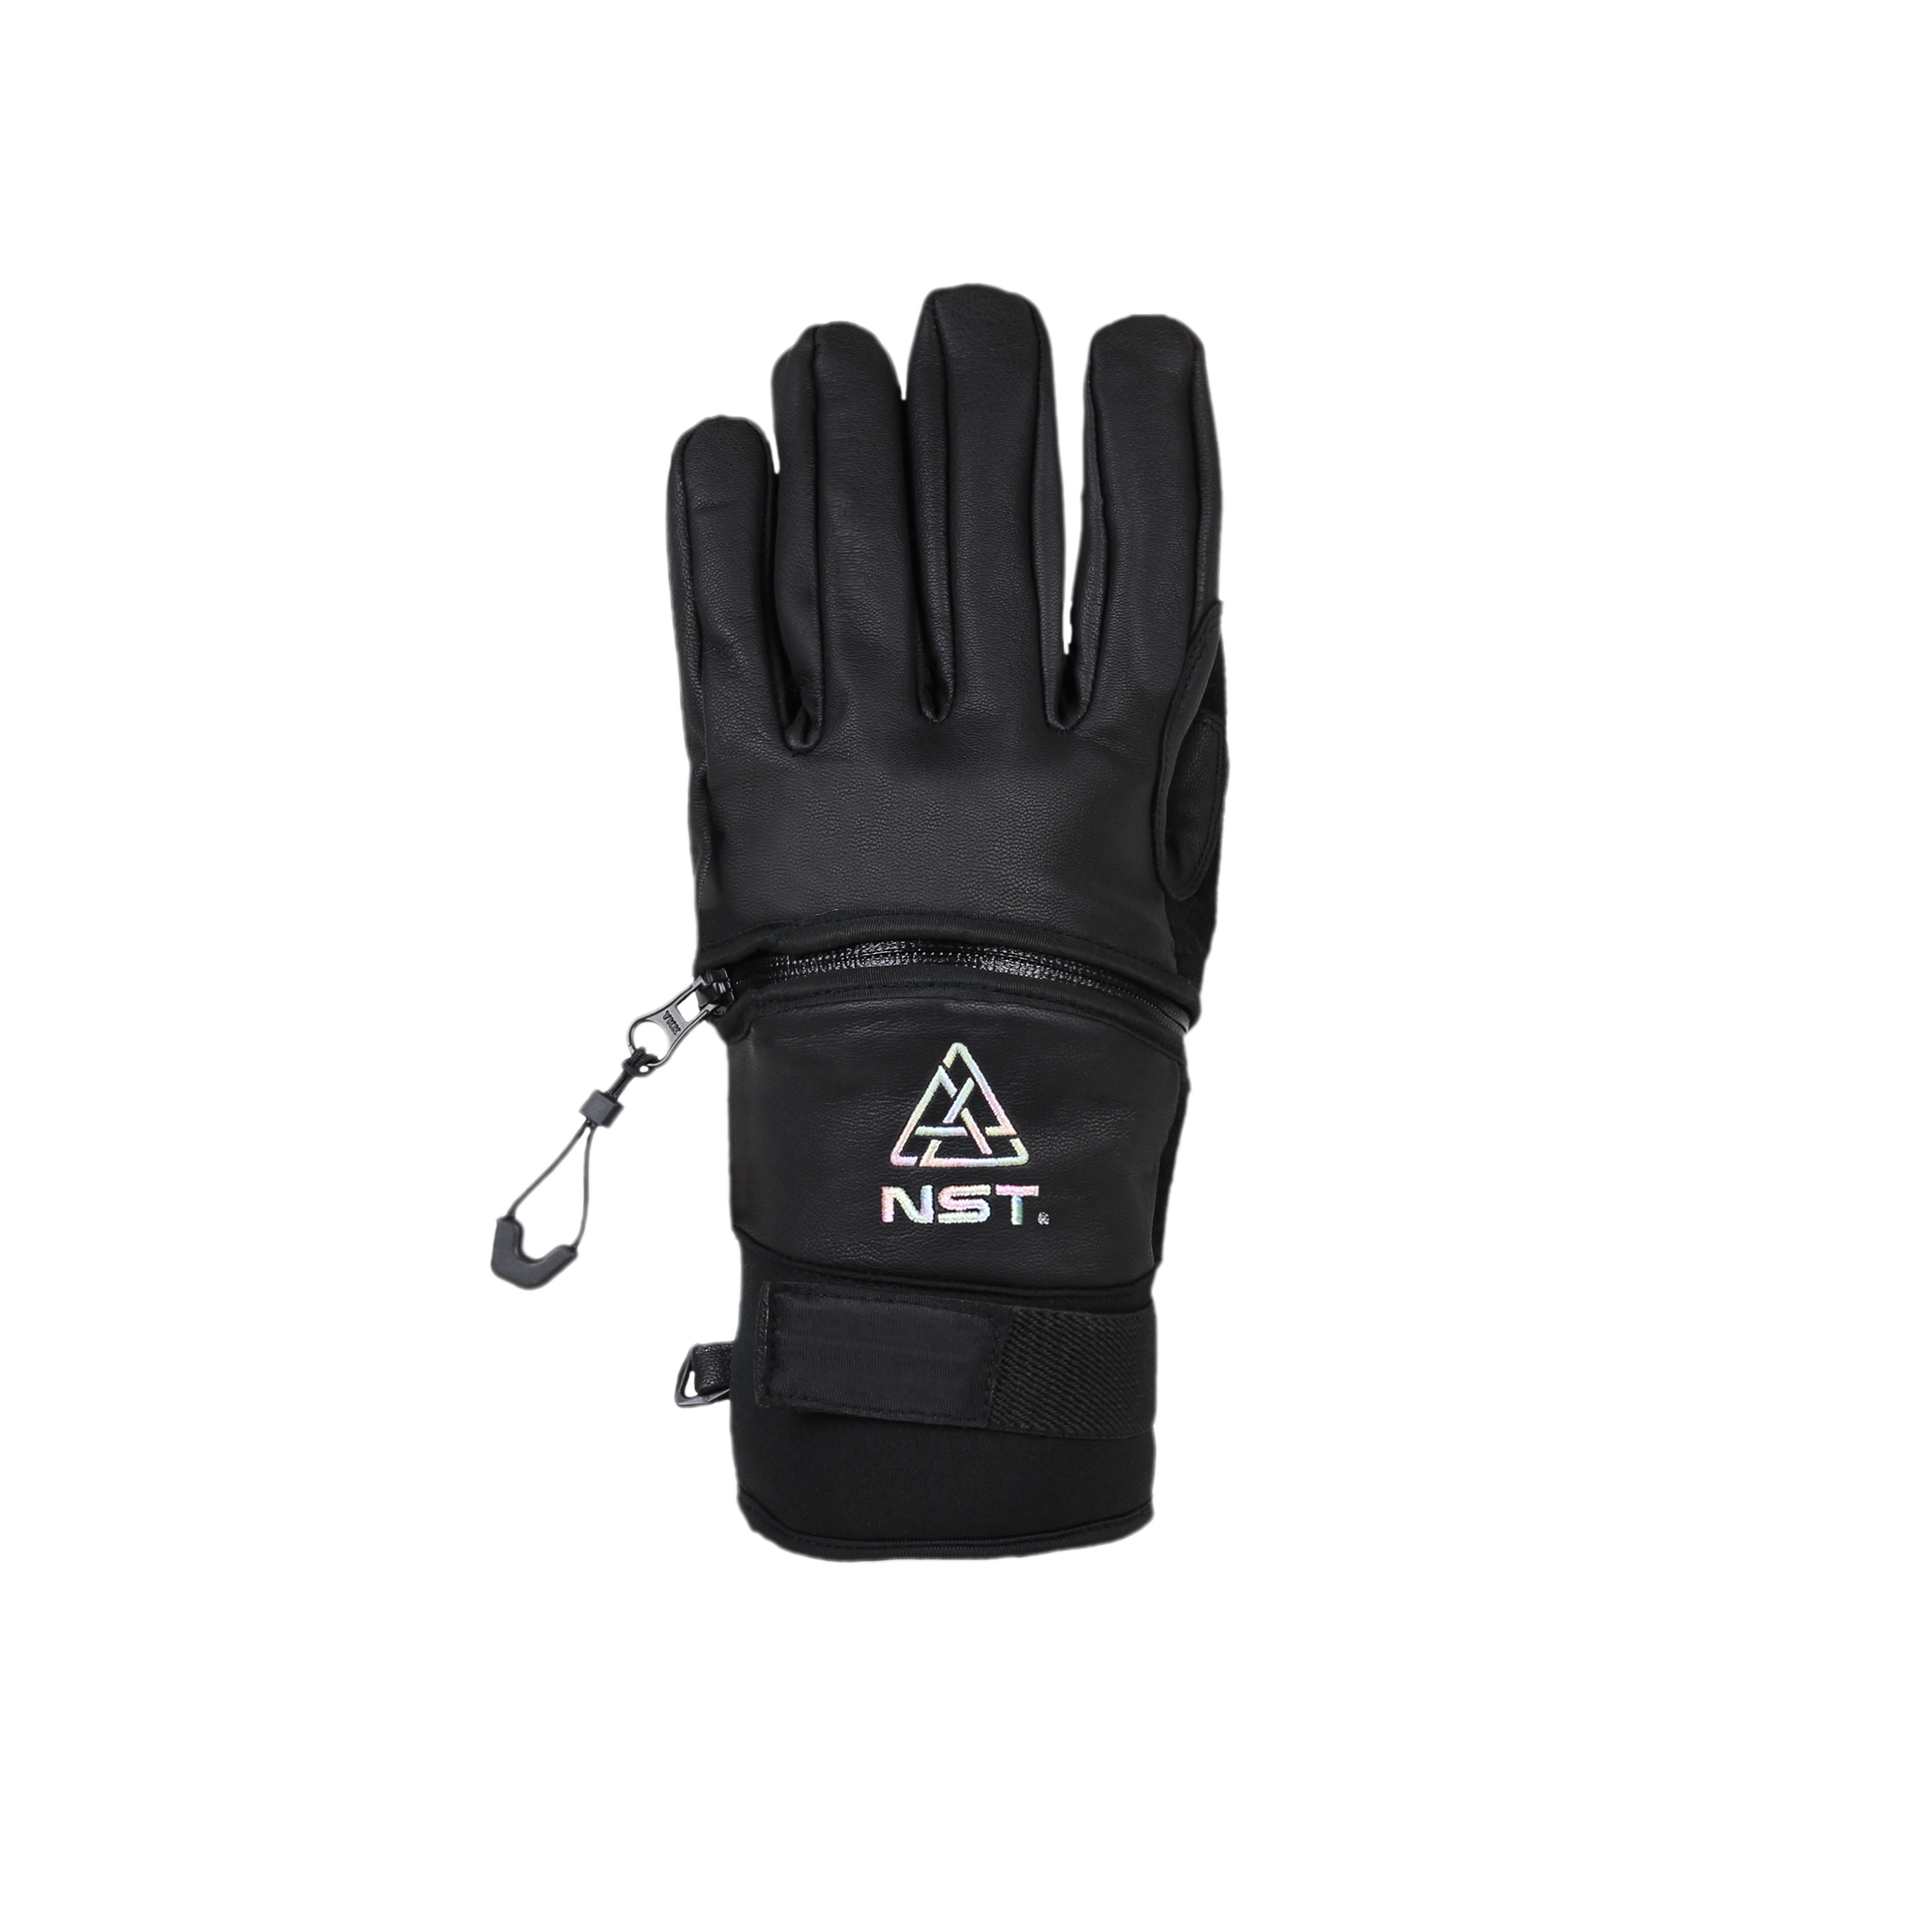 NST Pro Glove - Low